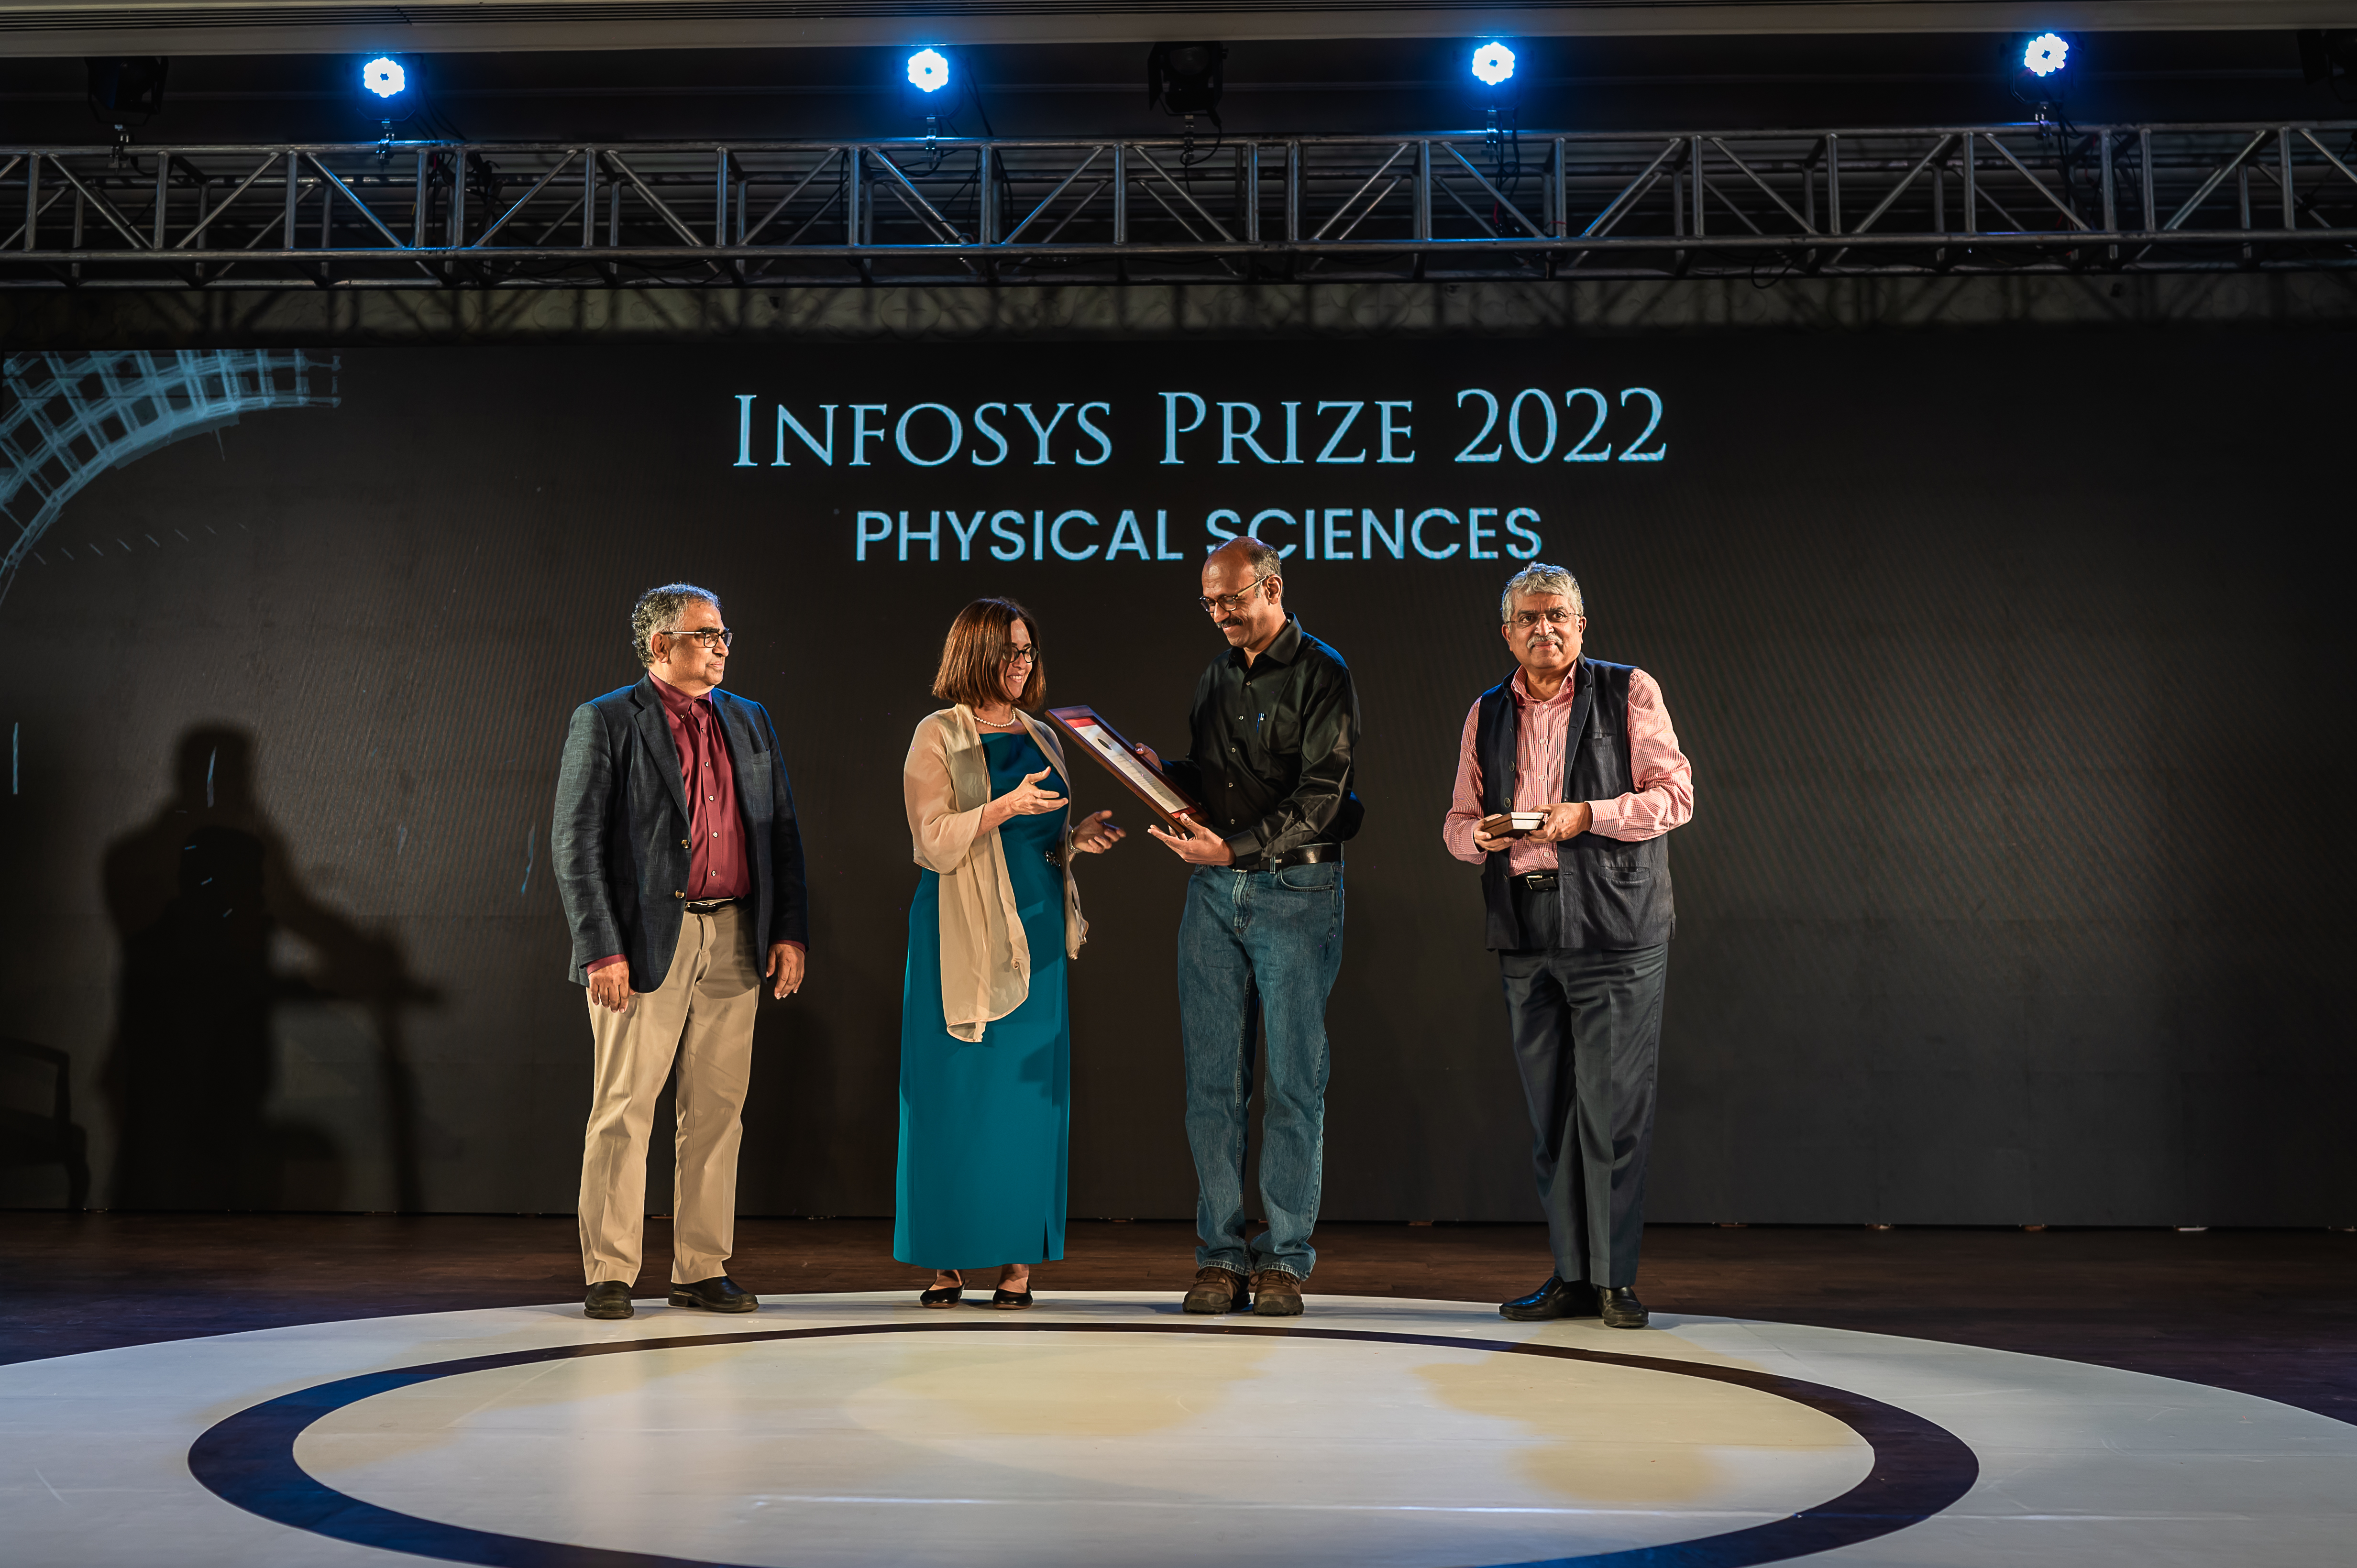 Prof. Shrinivas Kulkarni, Prof. Shafi Goldwasser and Mr. Nandan Nilekani presenting the Infosys Prize 2022 to Prof. Nissim Kanekar